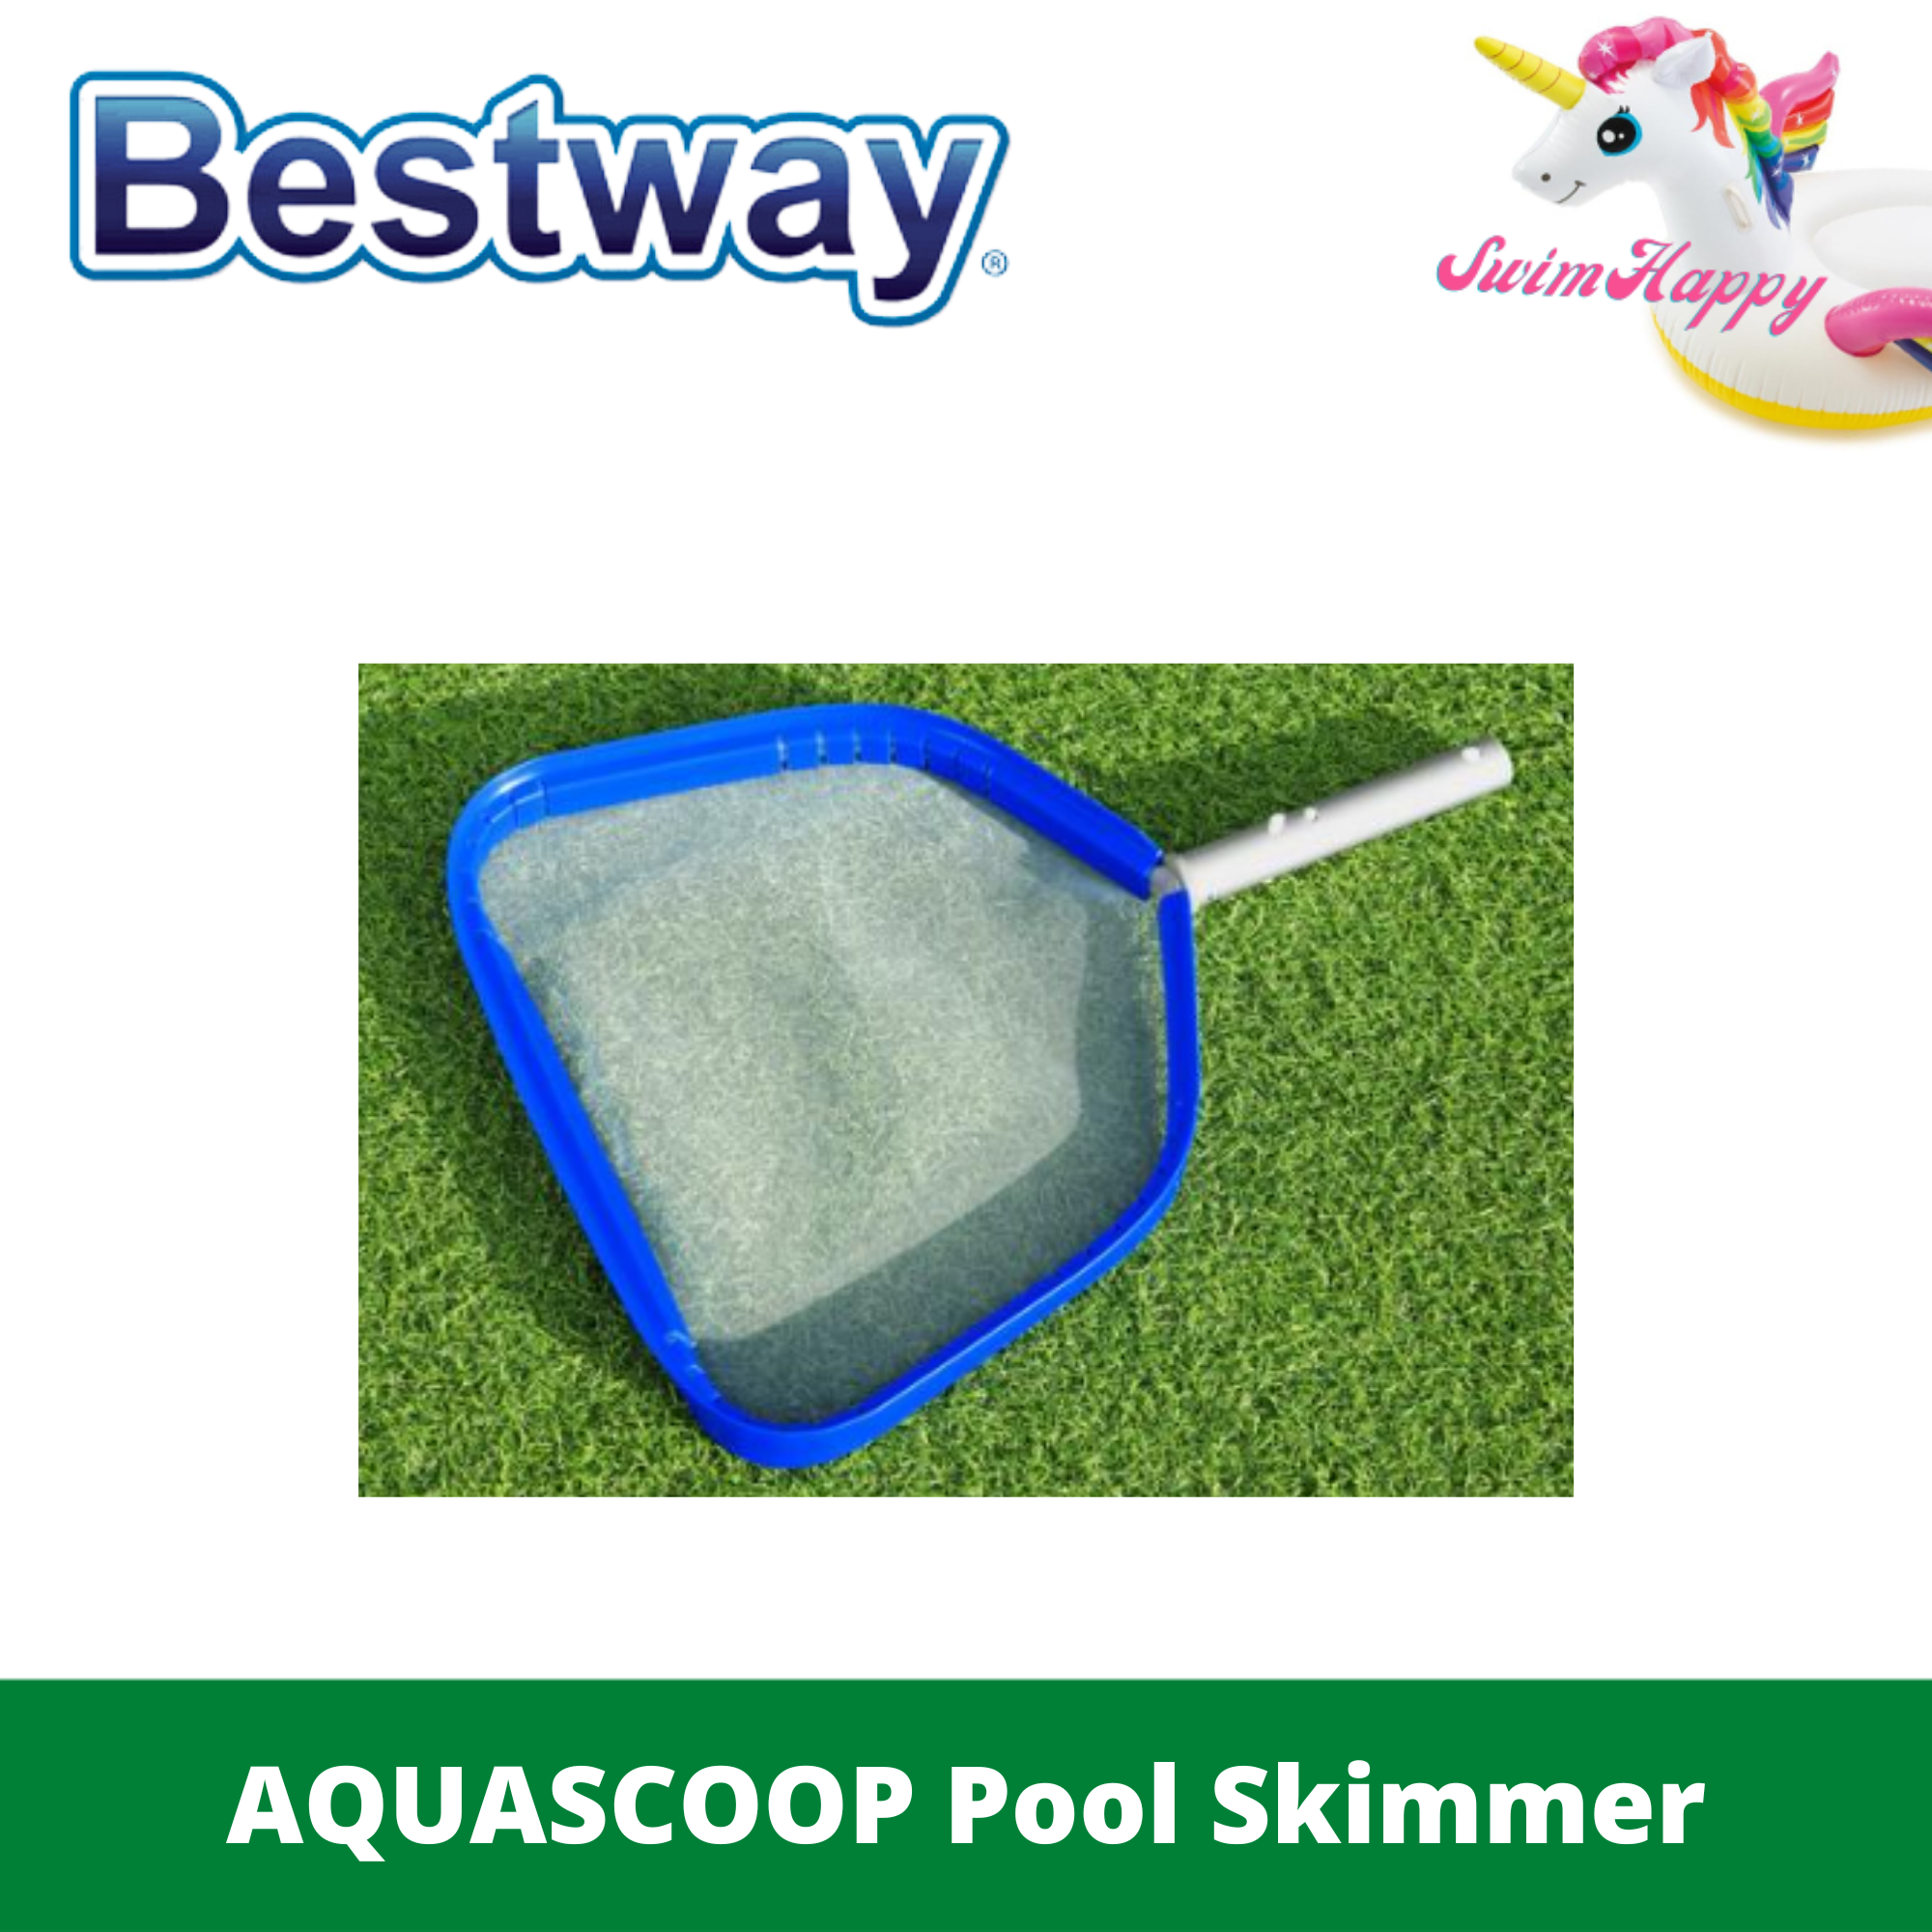 SwimHappy Bestway FlowClear 58659 AquaScoop Deluxe Skimmer Head 40cm x 34cm  | Lazada PH